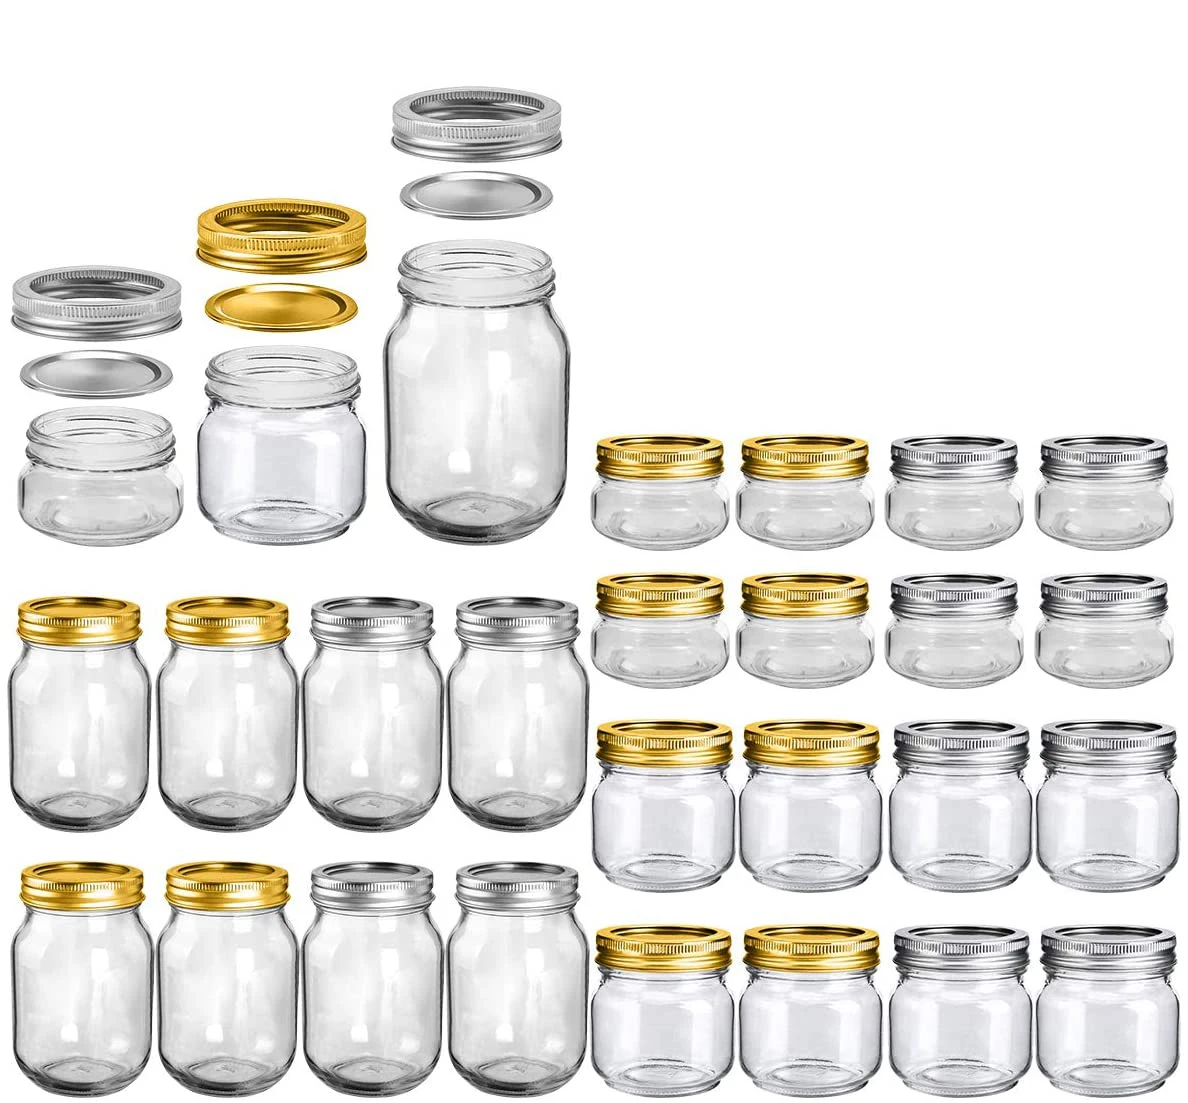 

Hot sale 4oz 8oz 16oz Clear Wide Mouth Glass Mason Jar Canning Food Storage Jar with metal lid